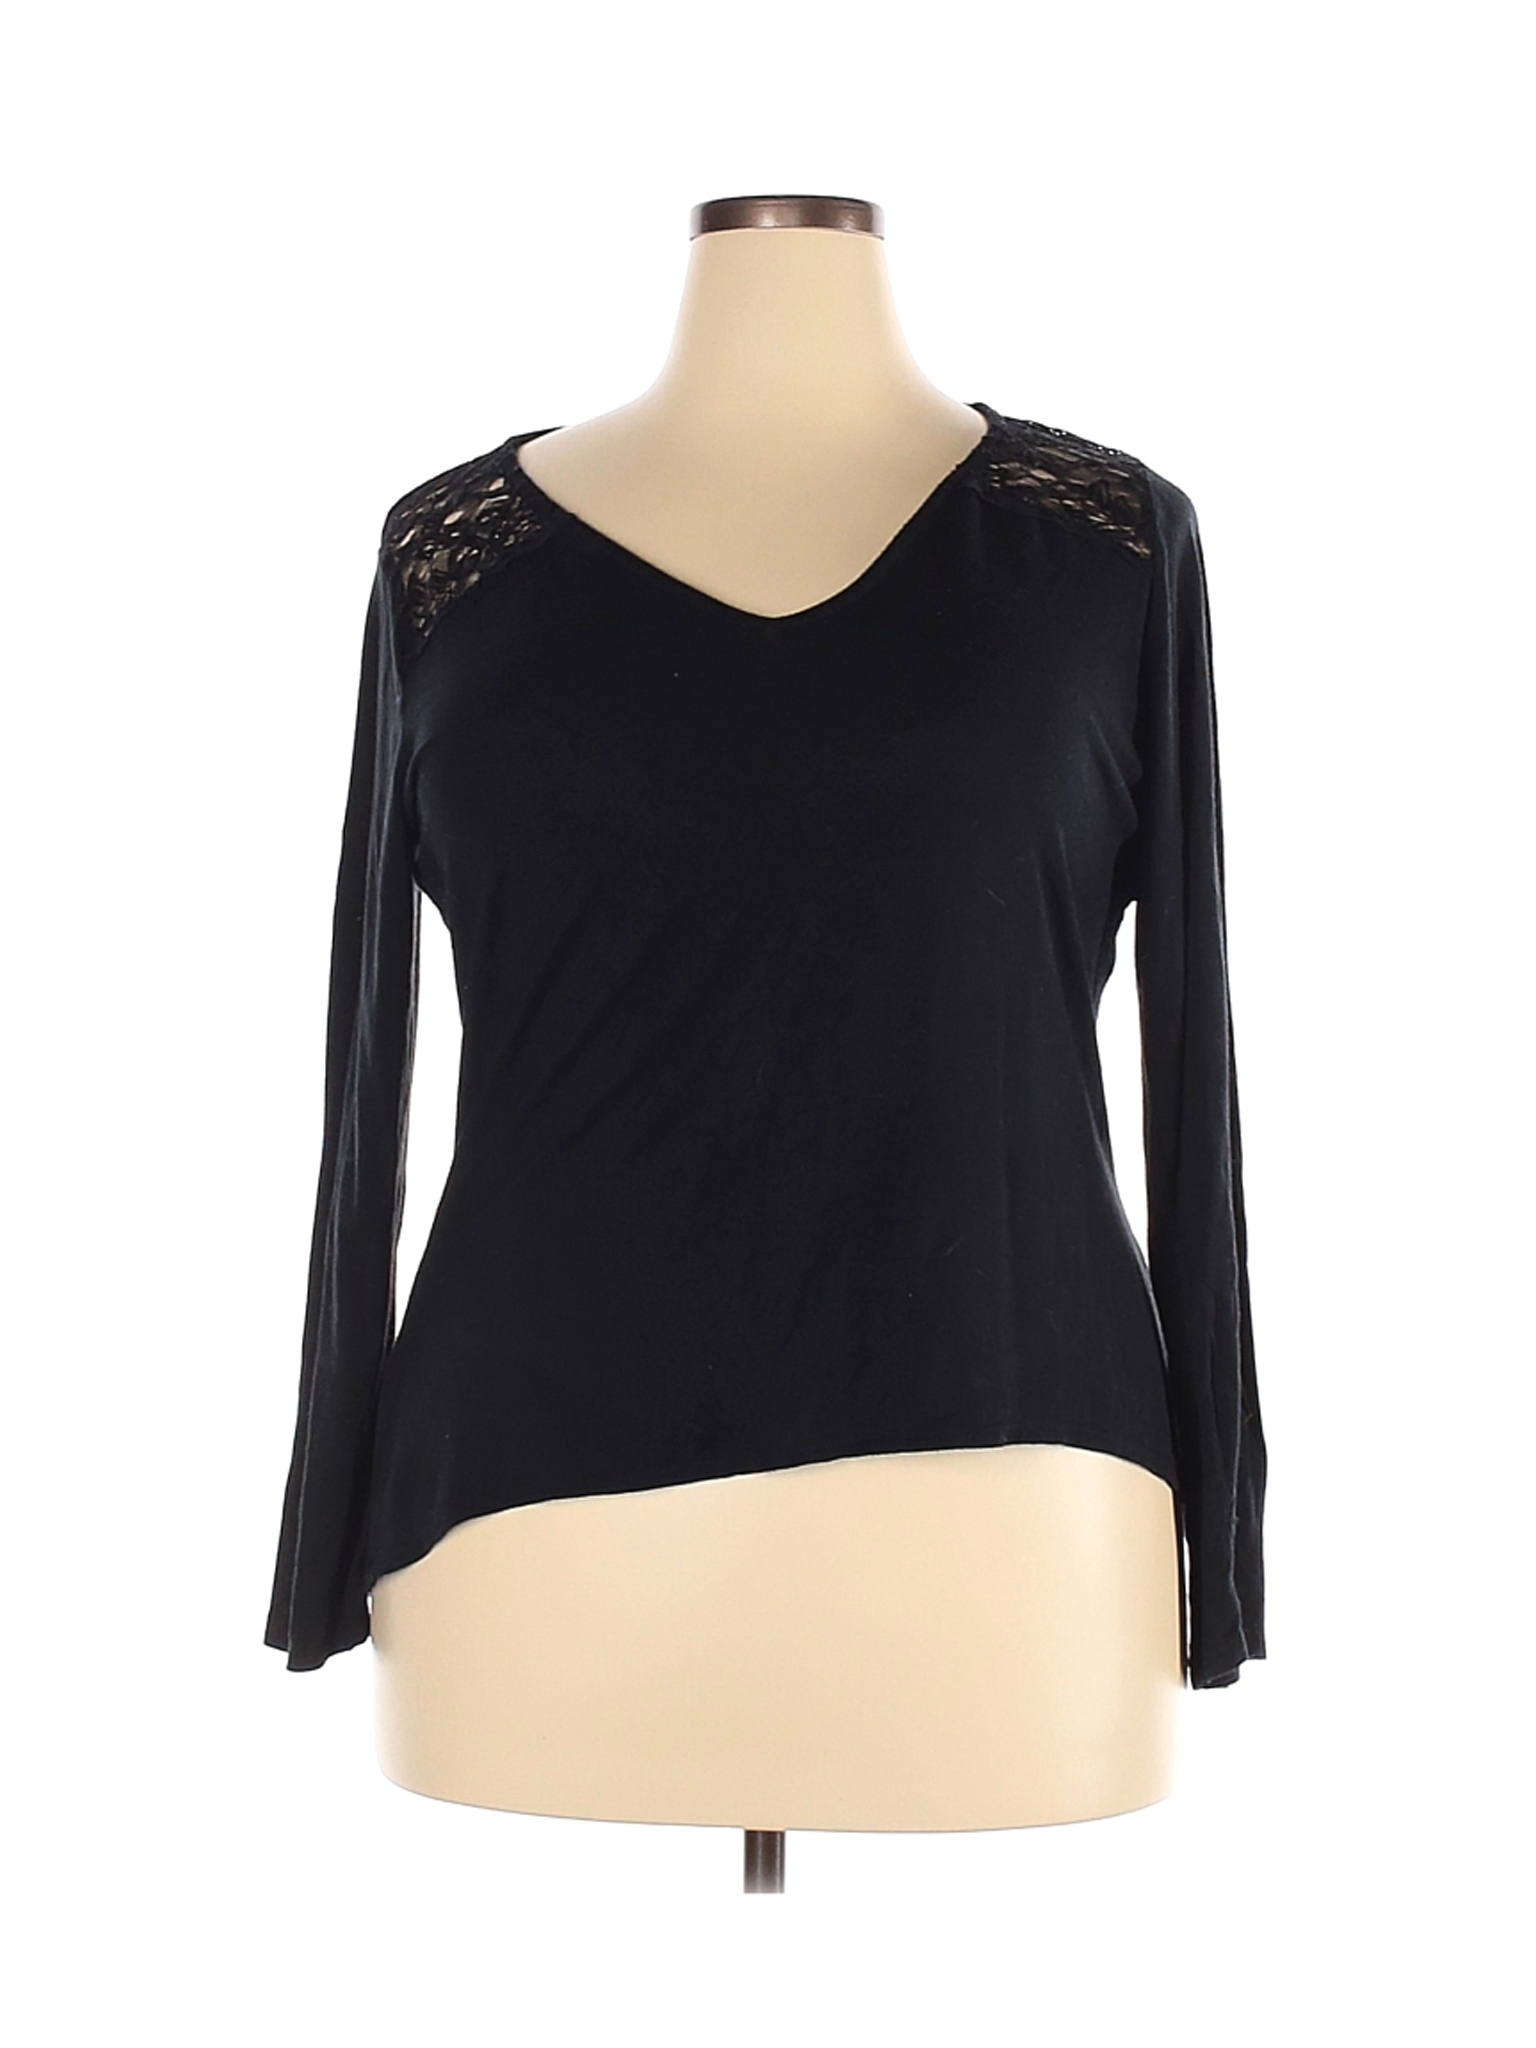 George Women Black Long Sleeve Top 2X Plus | eBay